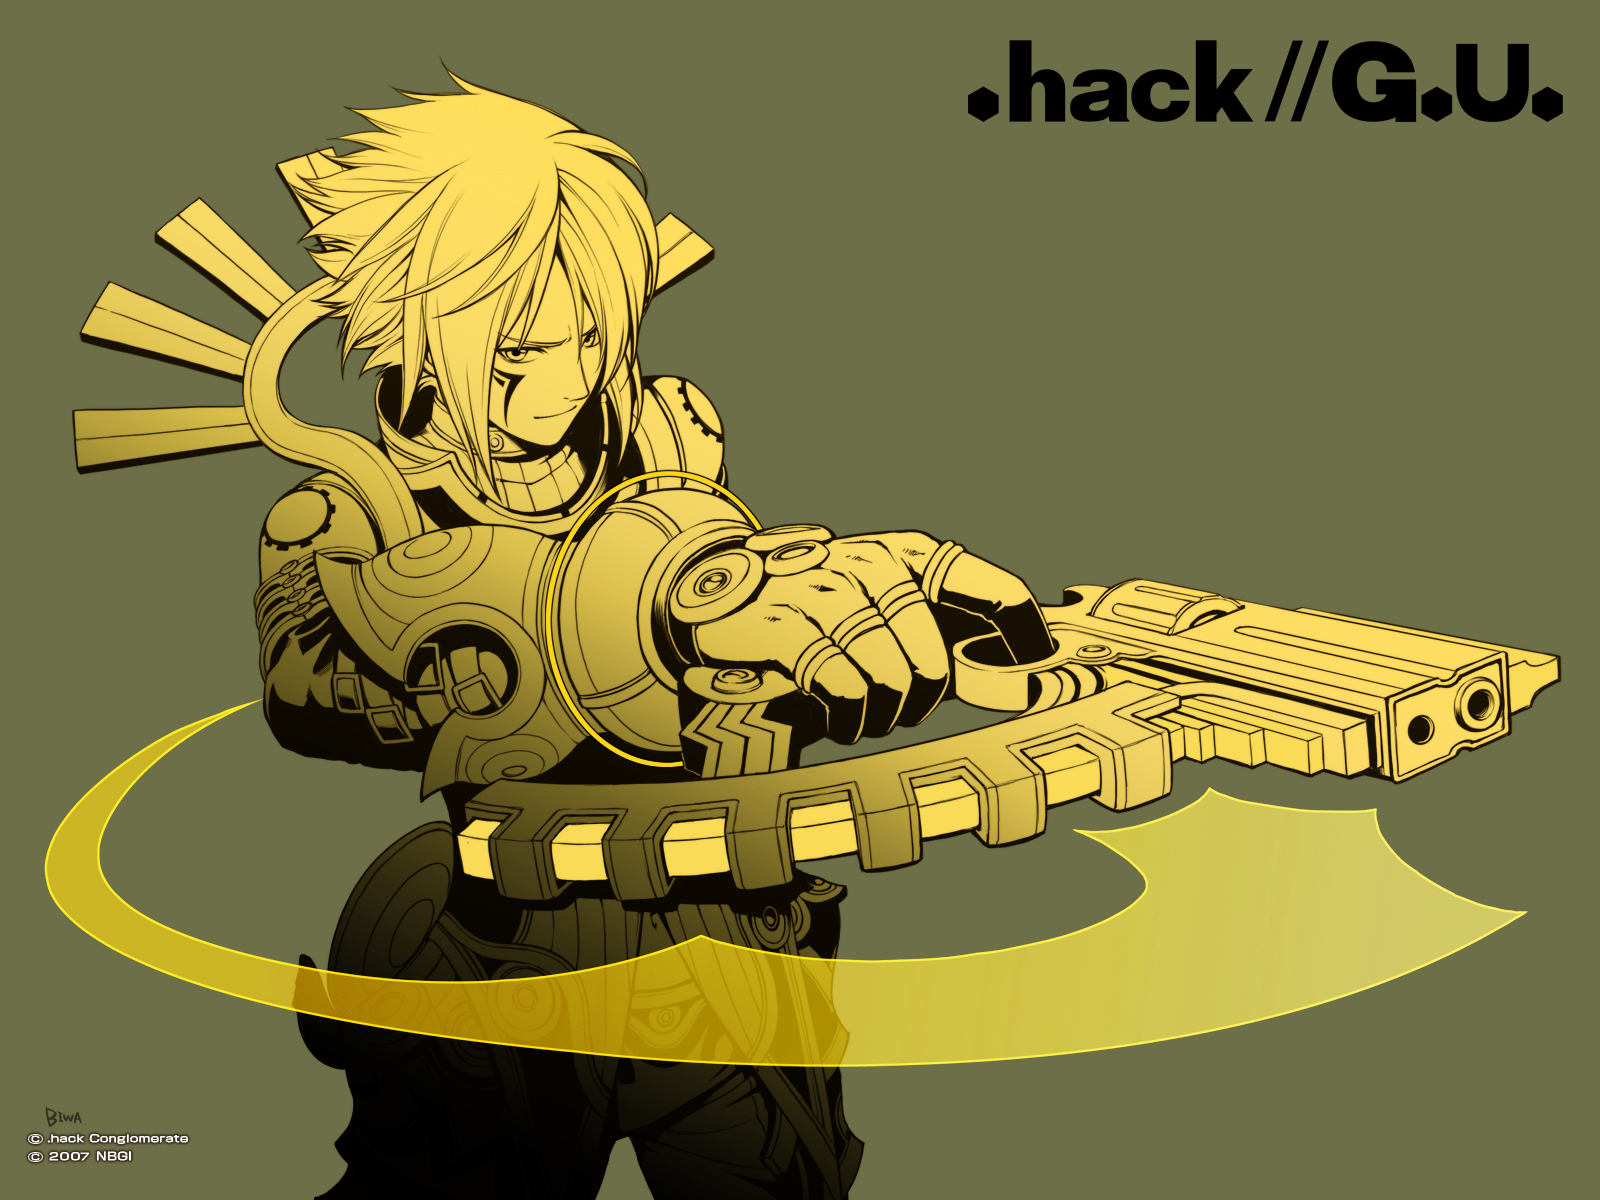 Dot Hack G U Game Music Ost 2 Mp3 Download Dot Hack G U Game Music Ost 2 Soundtracks For Free